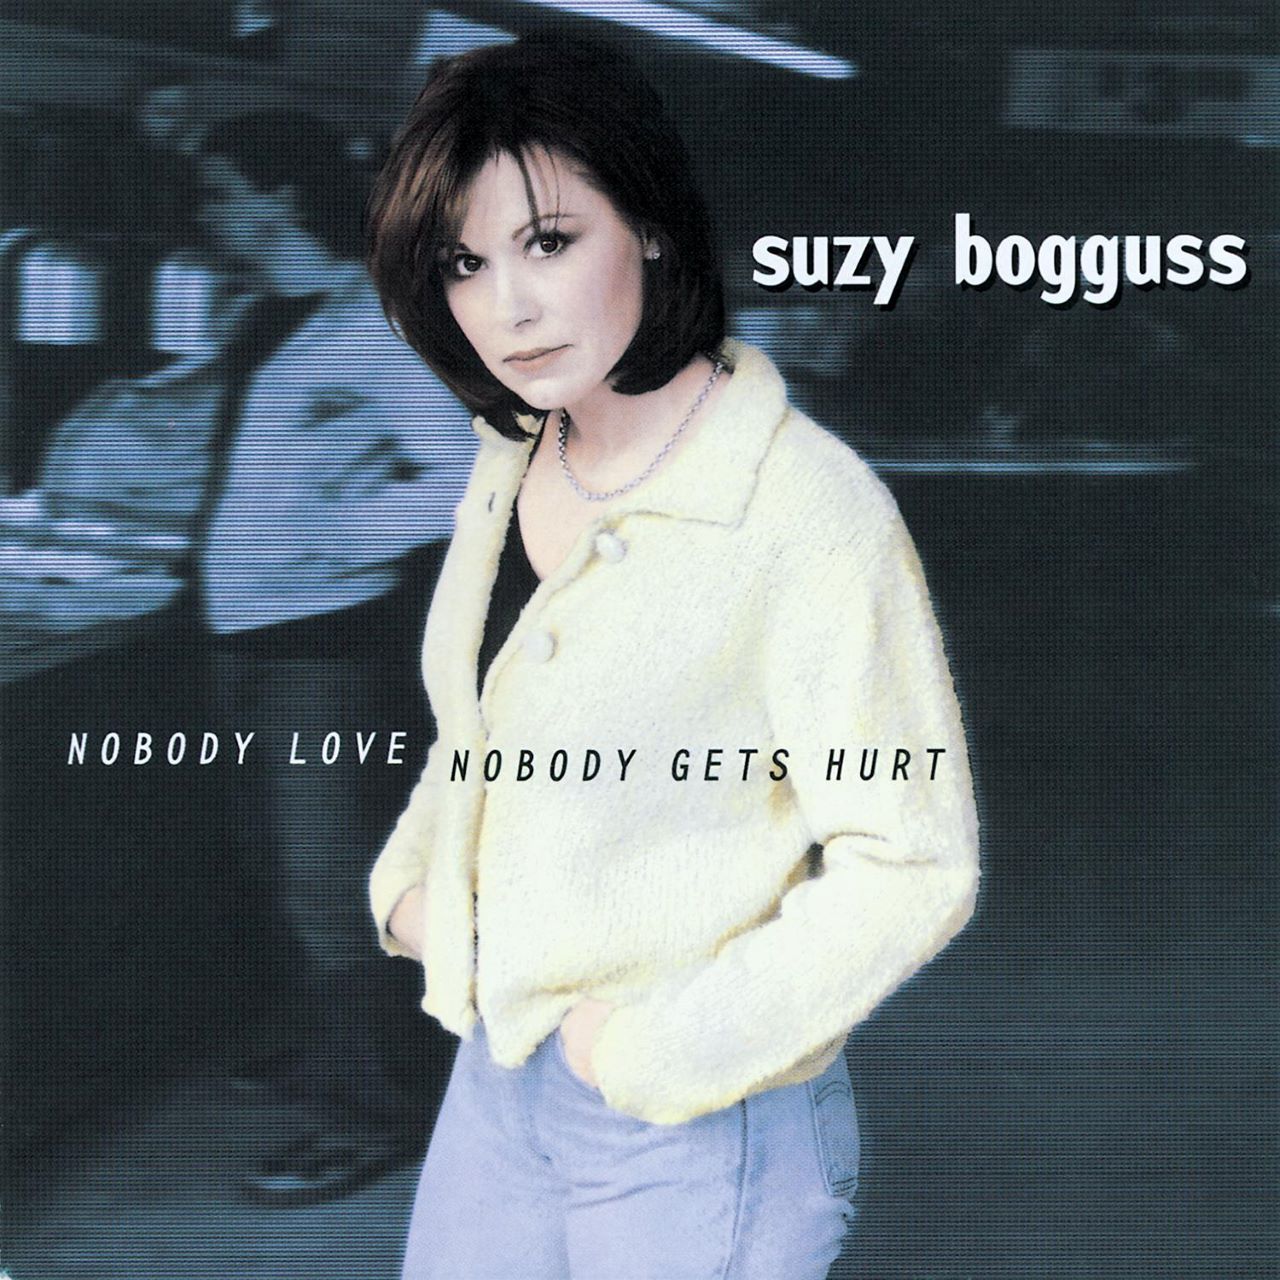 Suzy Bogguss - Nobody Love, Nobody Gets Hurt cover album